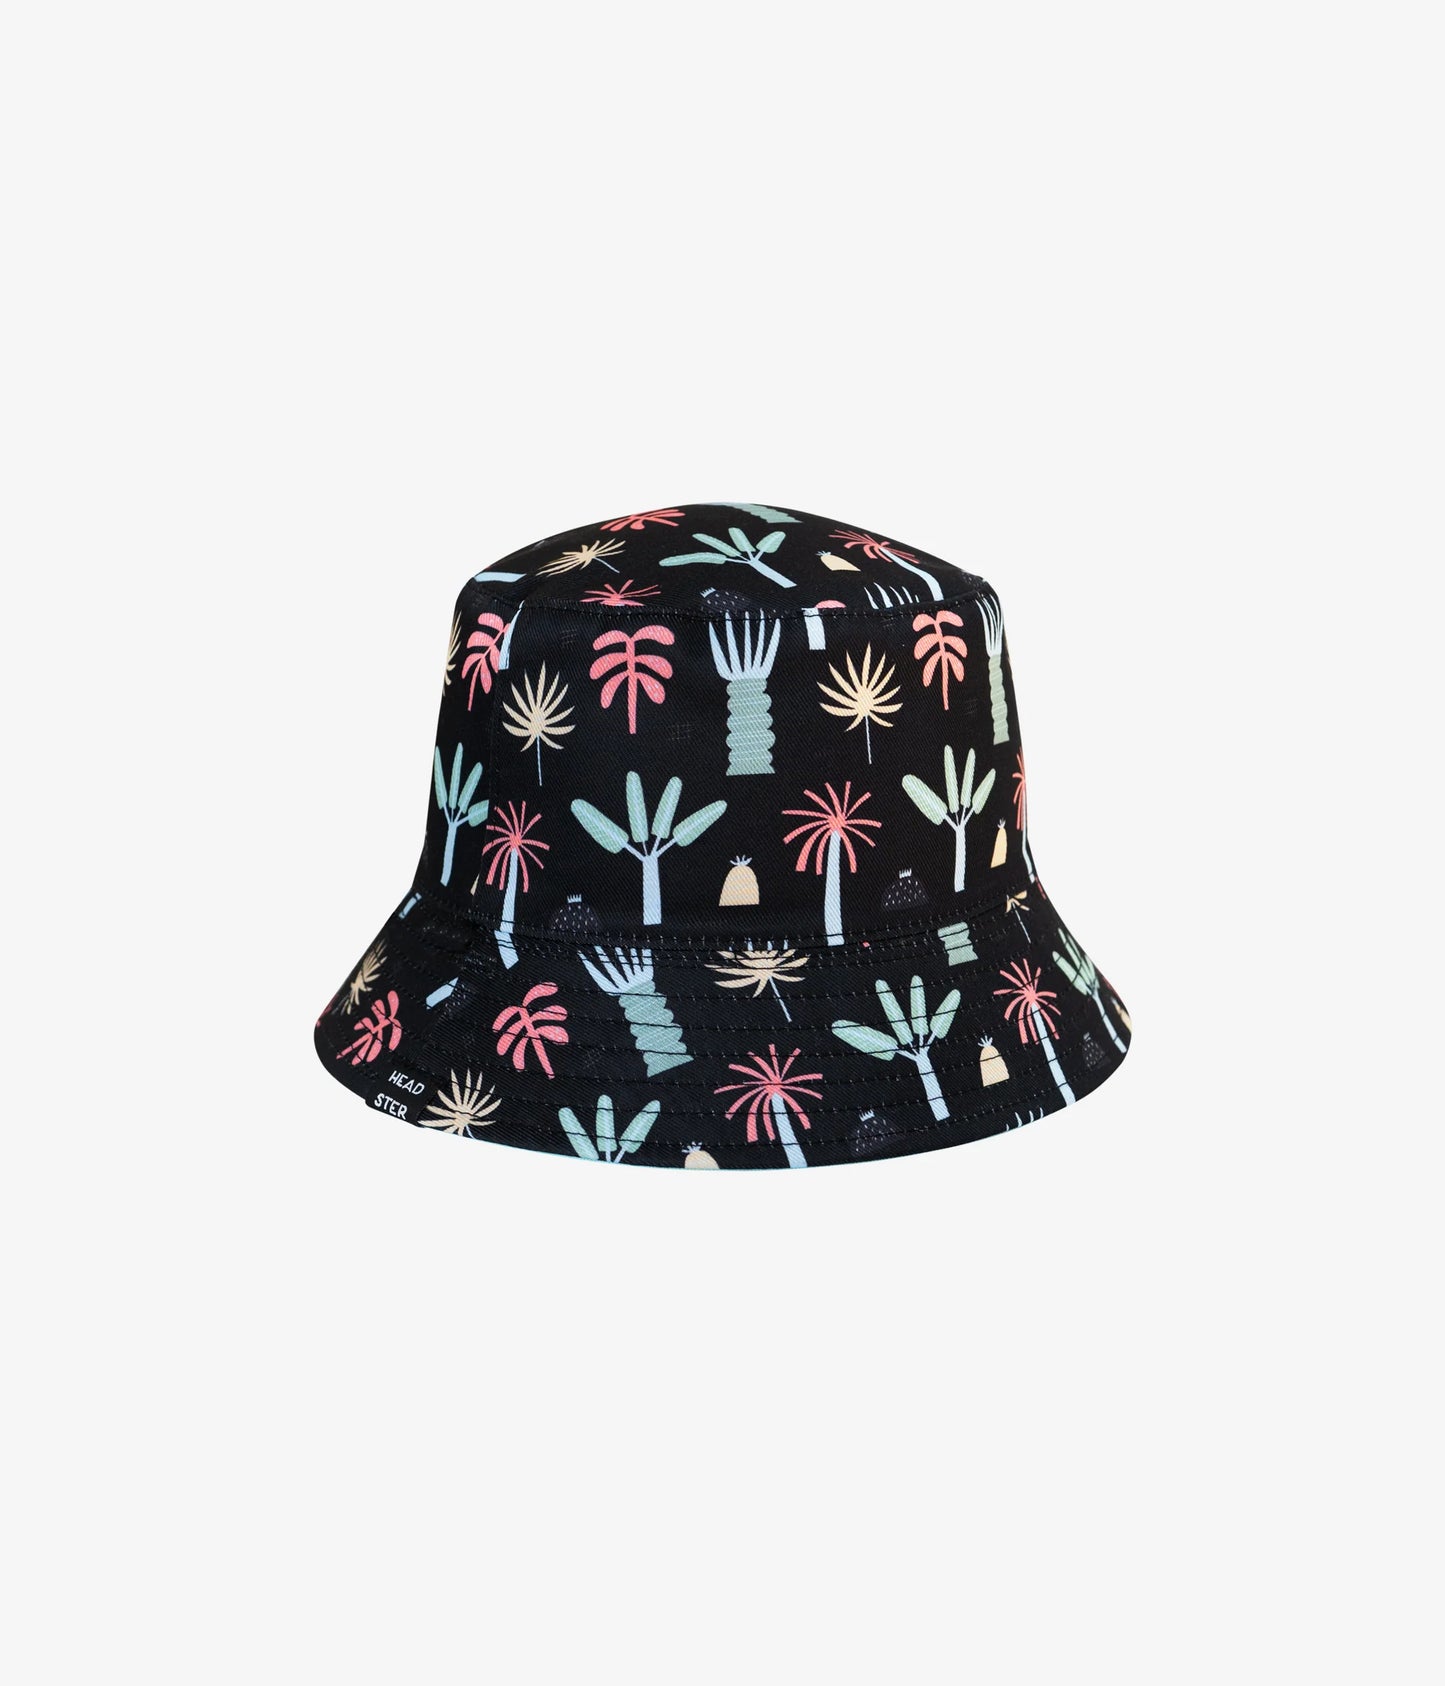 Jungle Fever Bucket Hat - Black